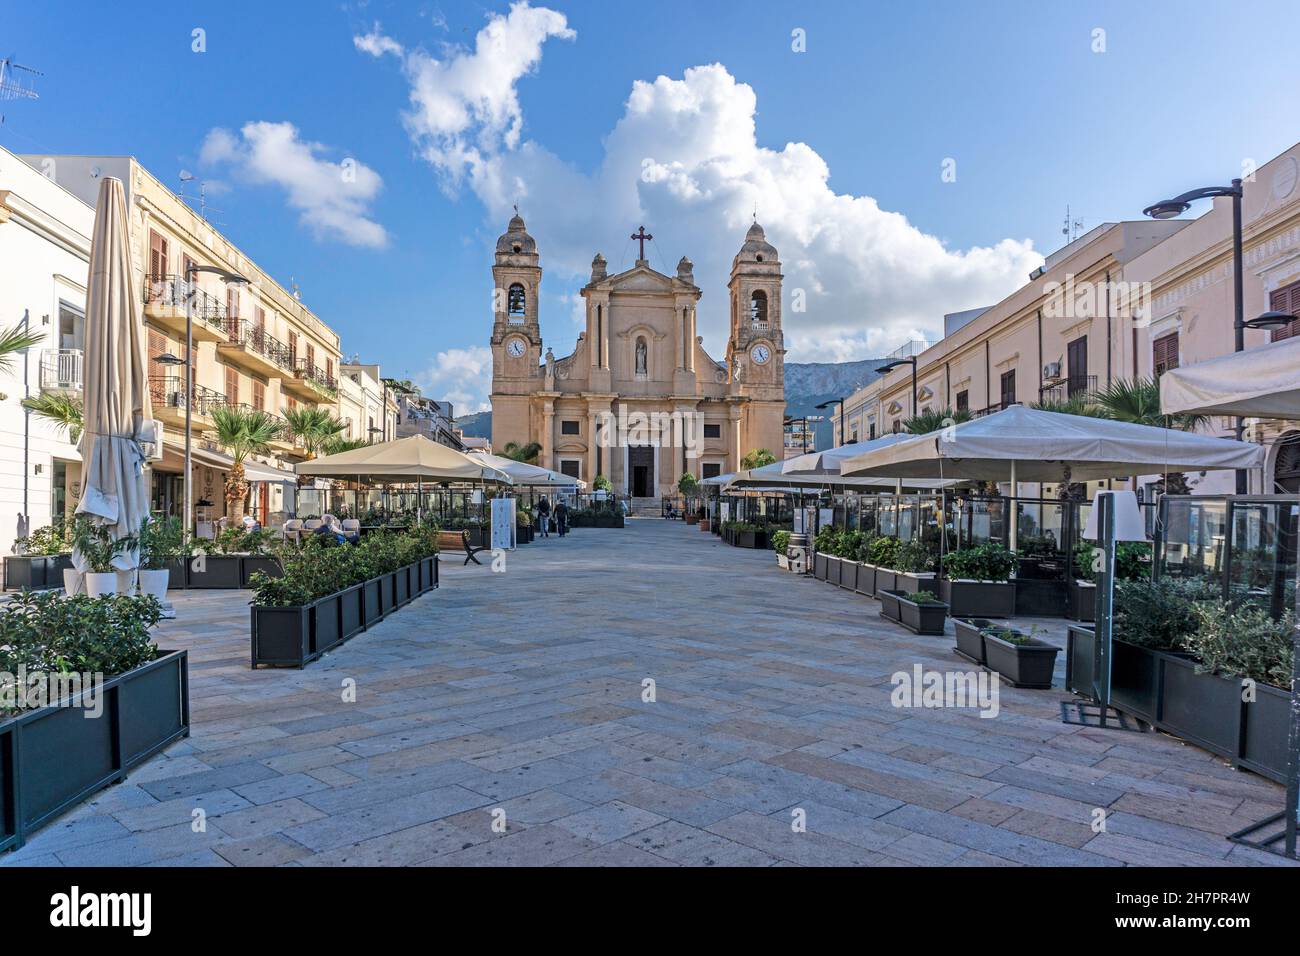 Piazza Duomo in Terrasini, Sicily, Italy. The central square in the town leading to the church of Saint Maria Santissima delle Grazie. Stock Photo